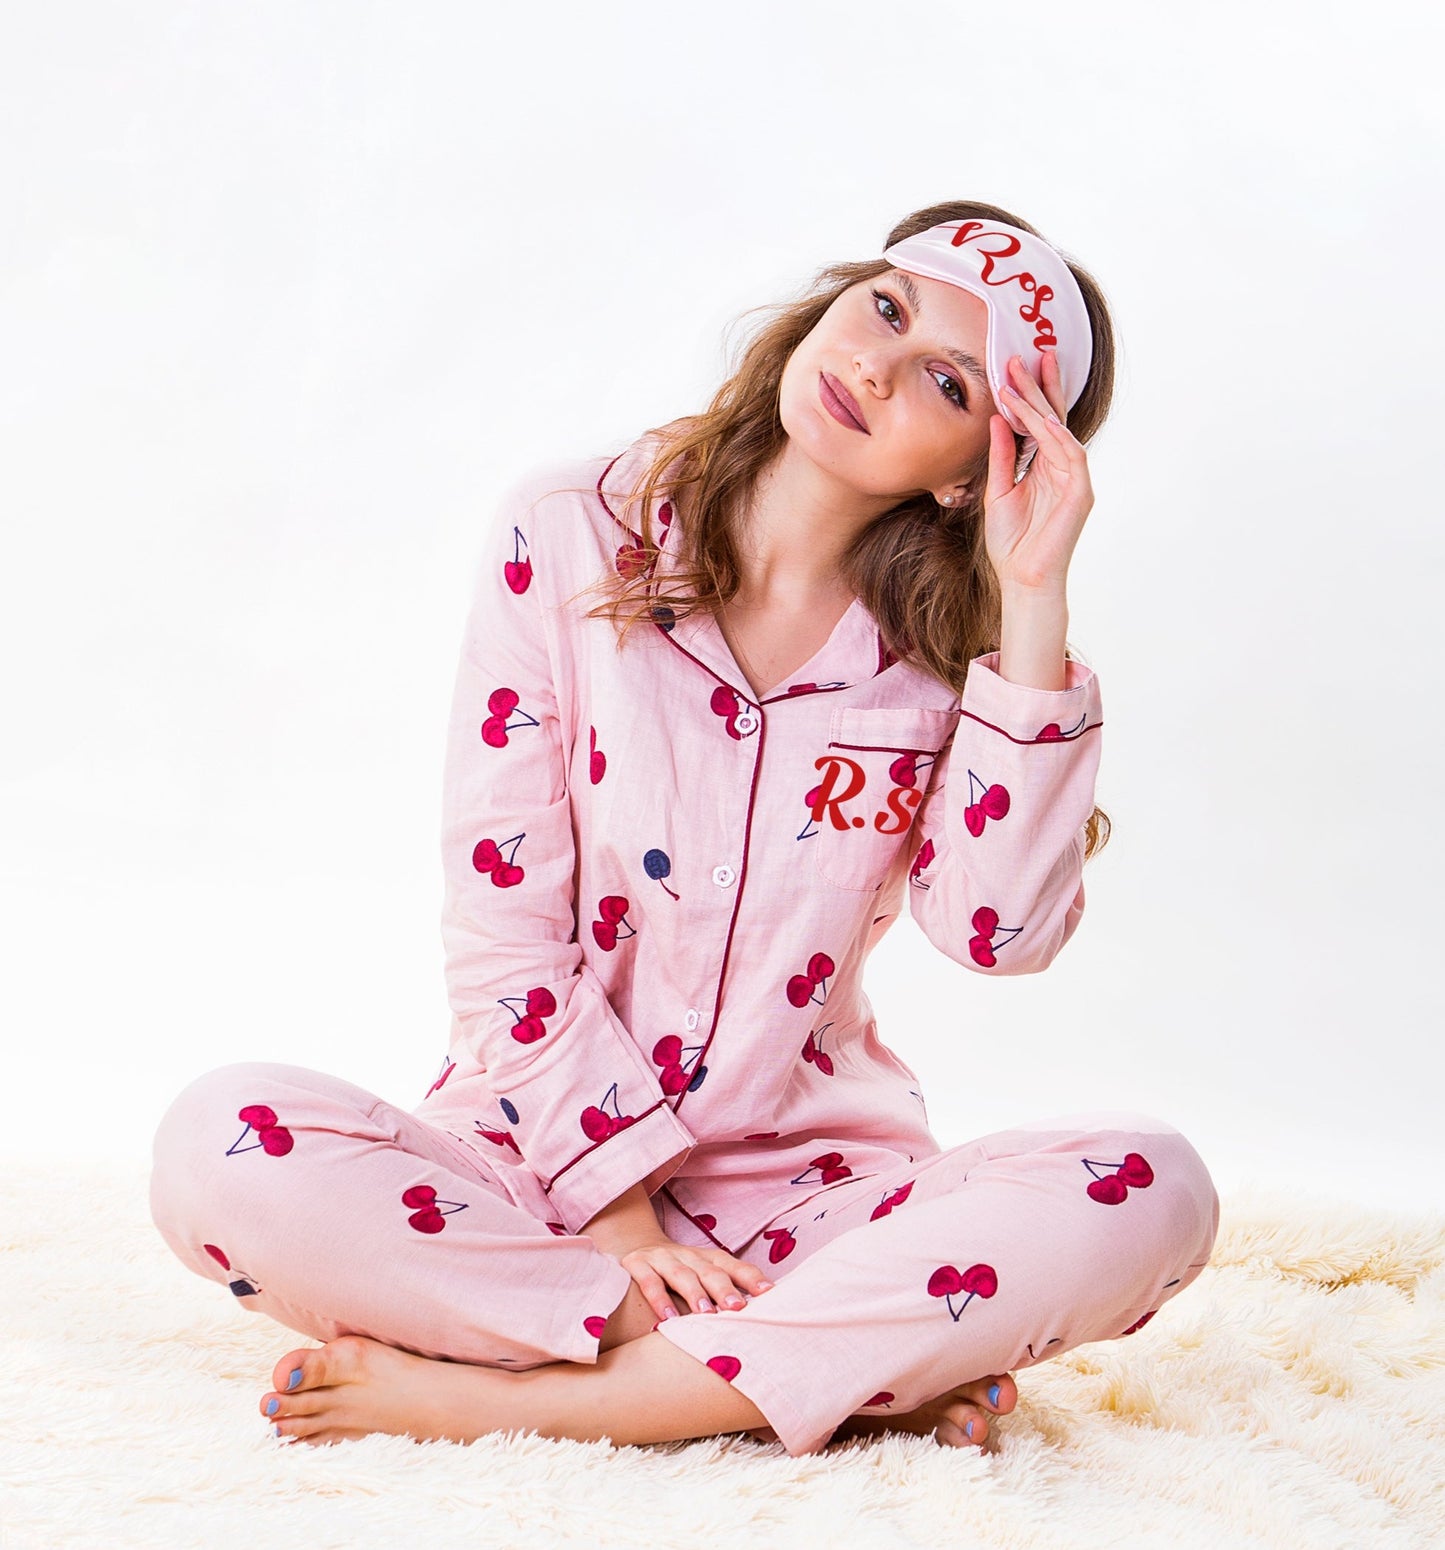 Cherry Print Cotton Pajama Set